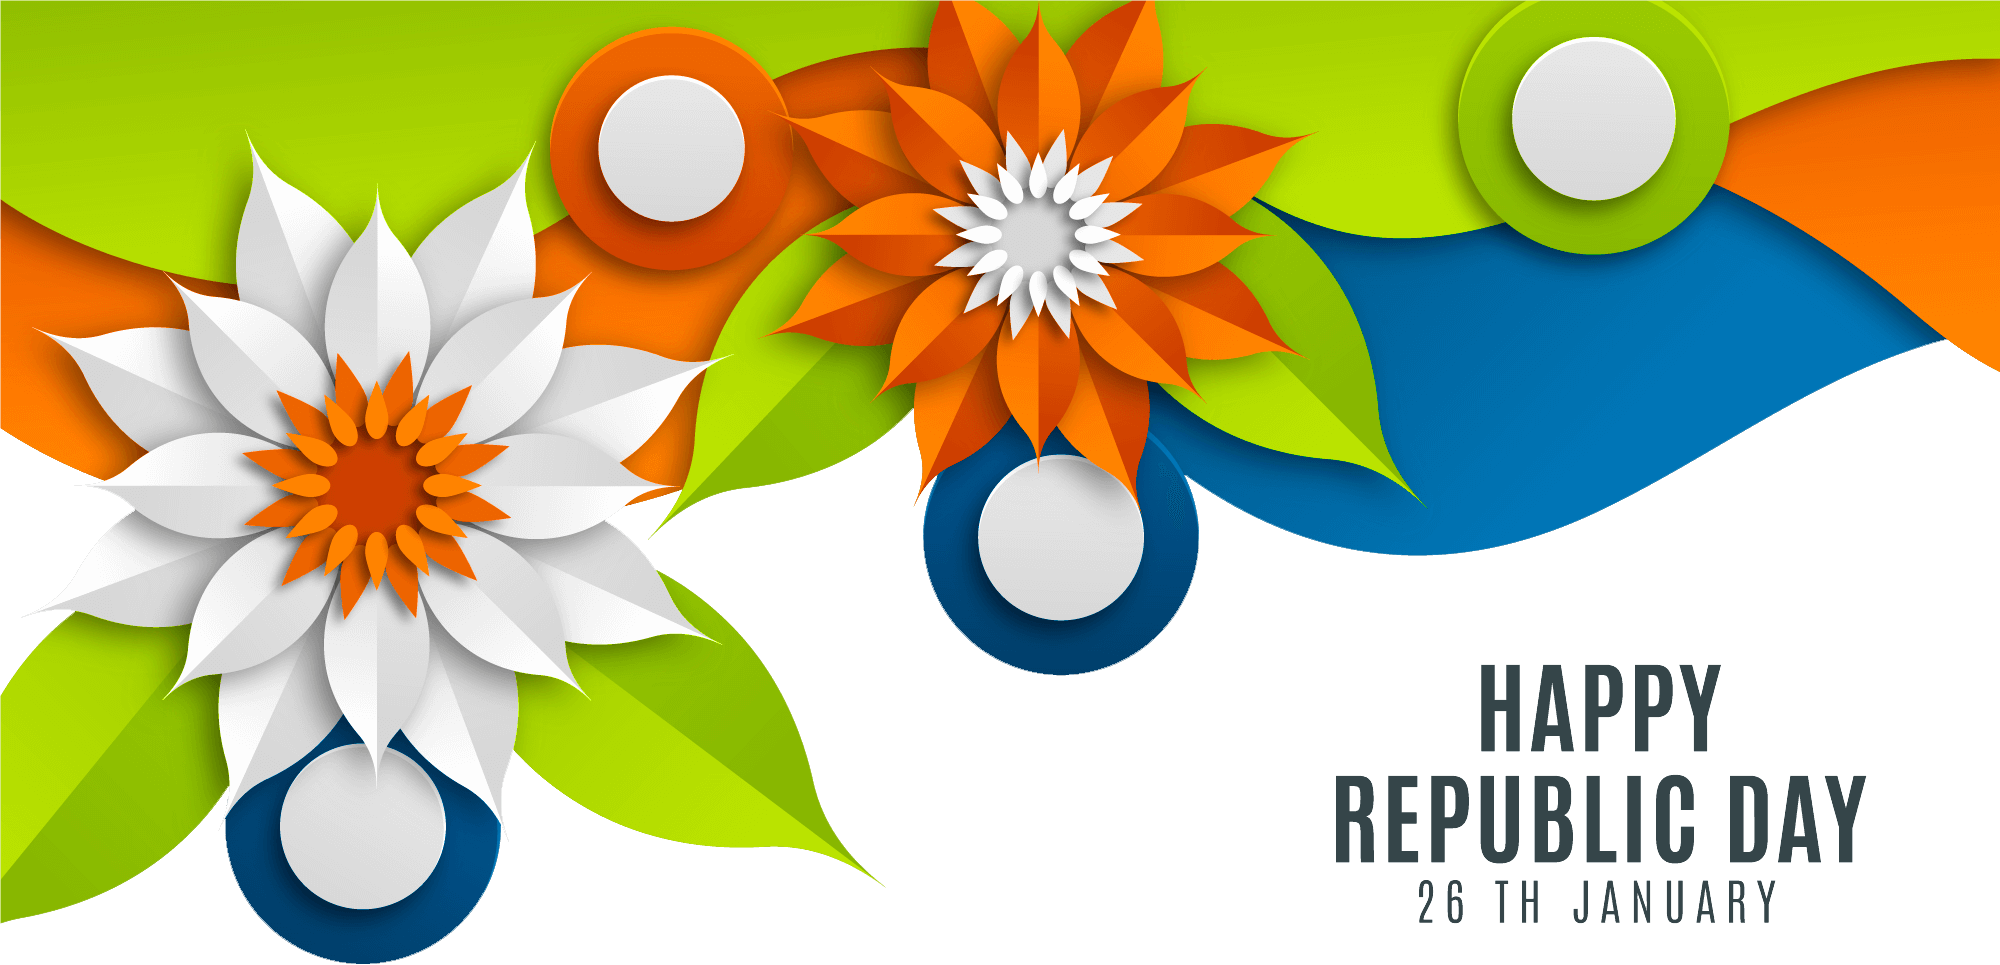 Republic day illustration design vector png image - Pngfreepic